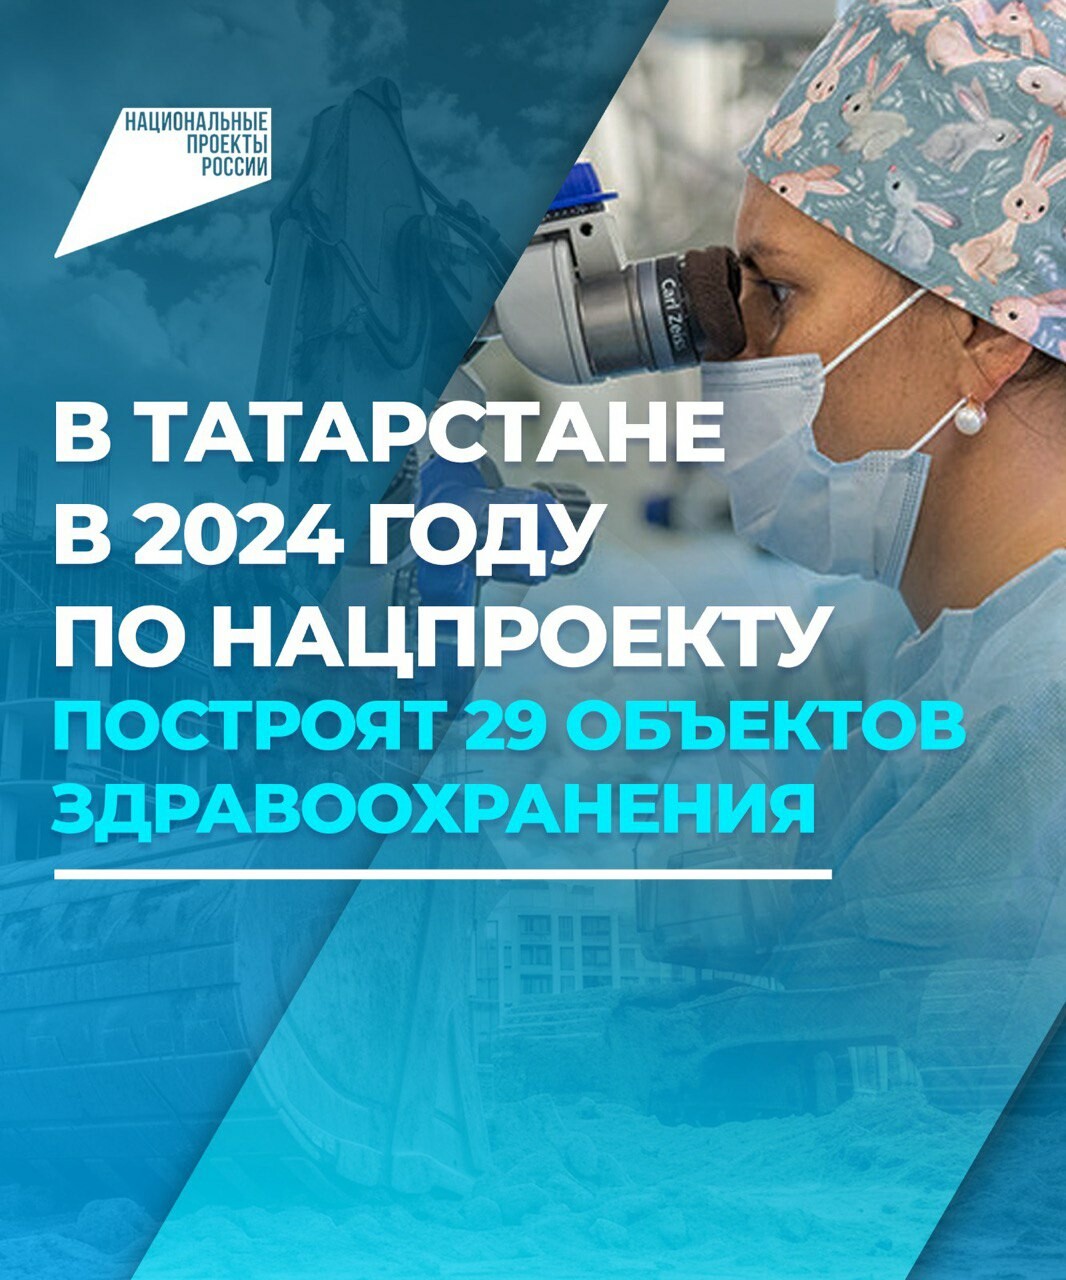 В Татарстане в 2024 году по нацпроекту построят 29 объектов здравоохранения